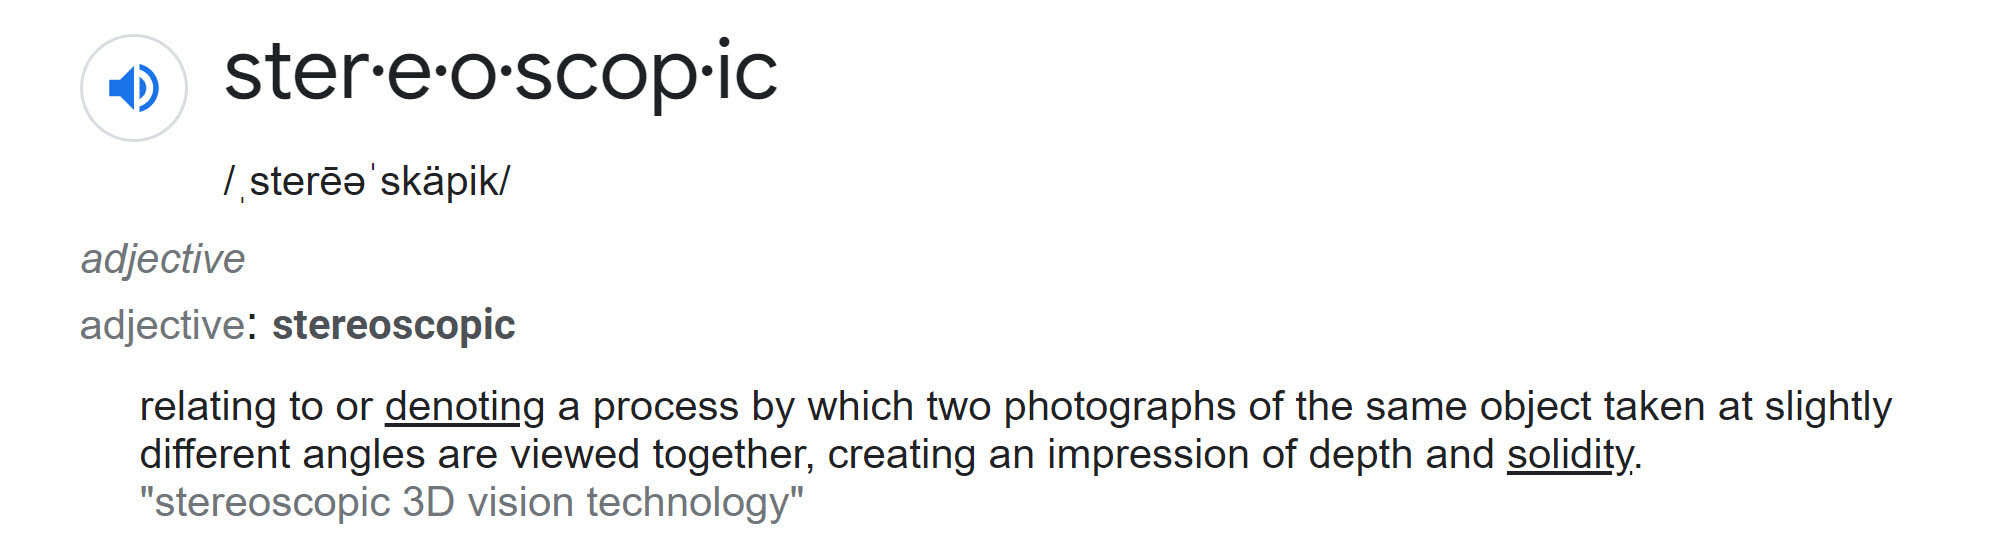 Stereoscopic definition